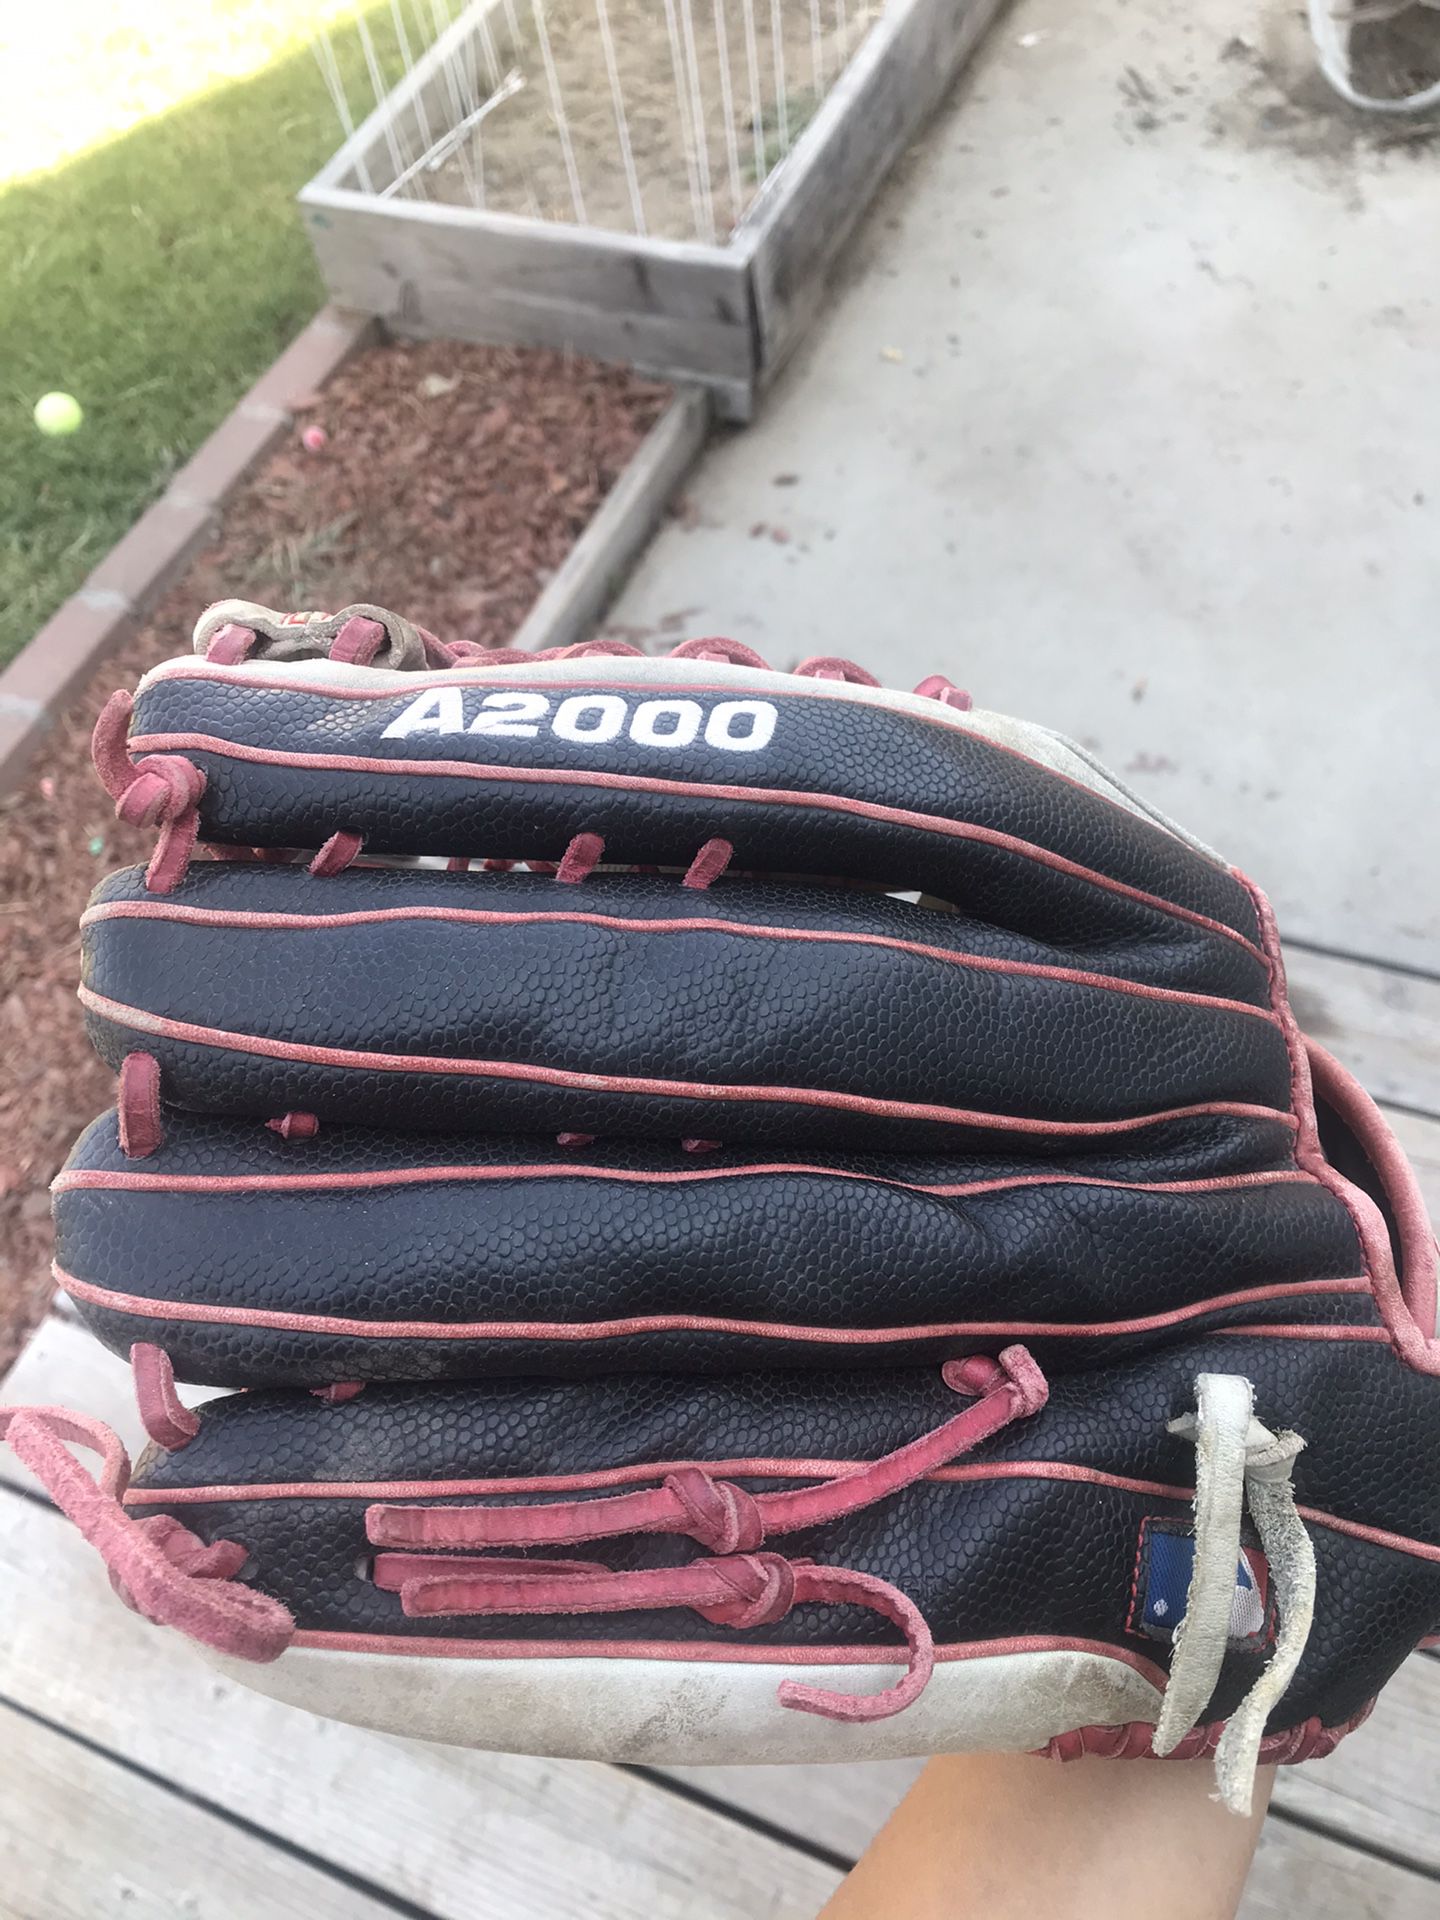 A2000 Outfield baseball glove